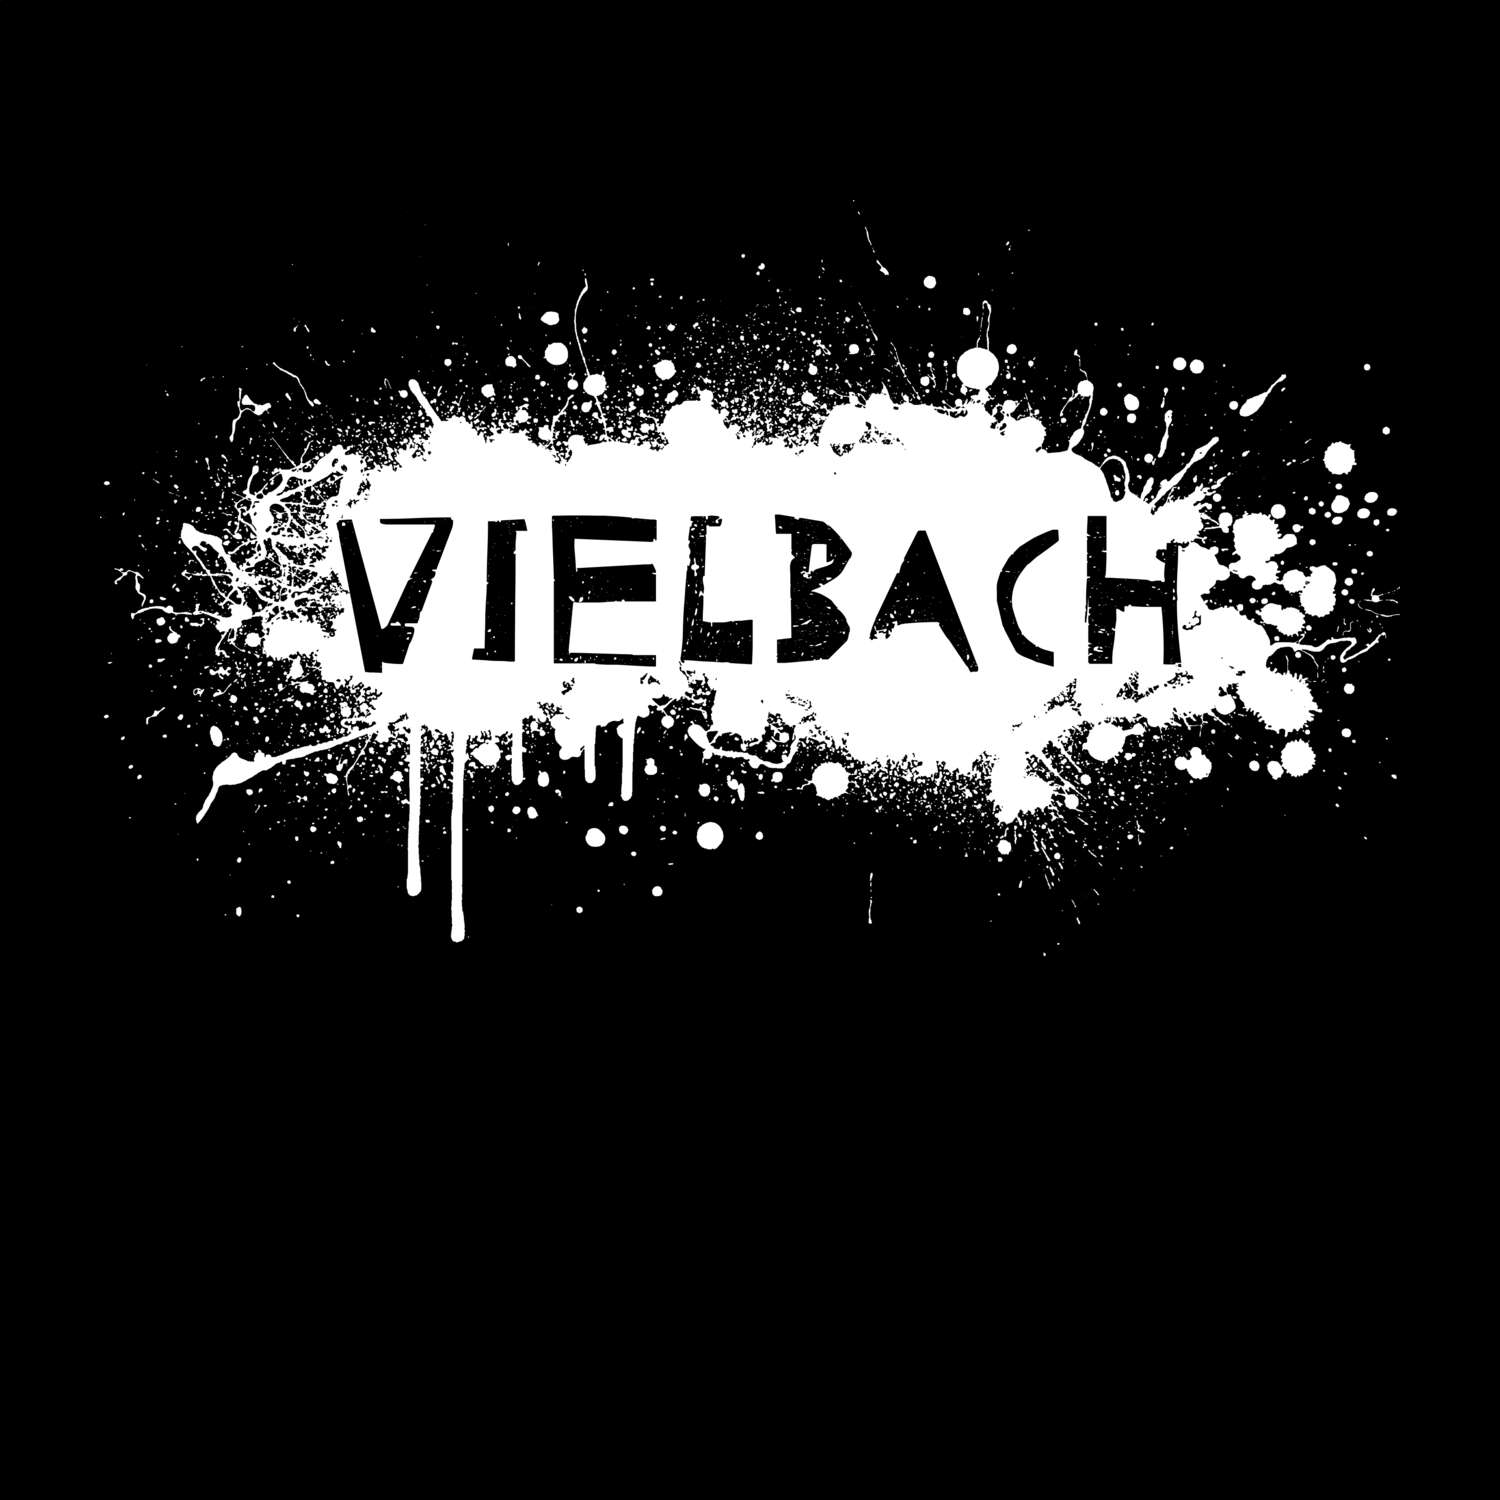 Vielbach T-Shirt »Paint Splash Punk«